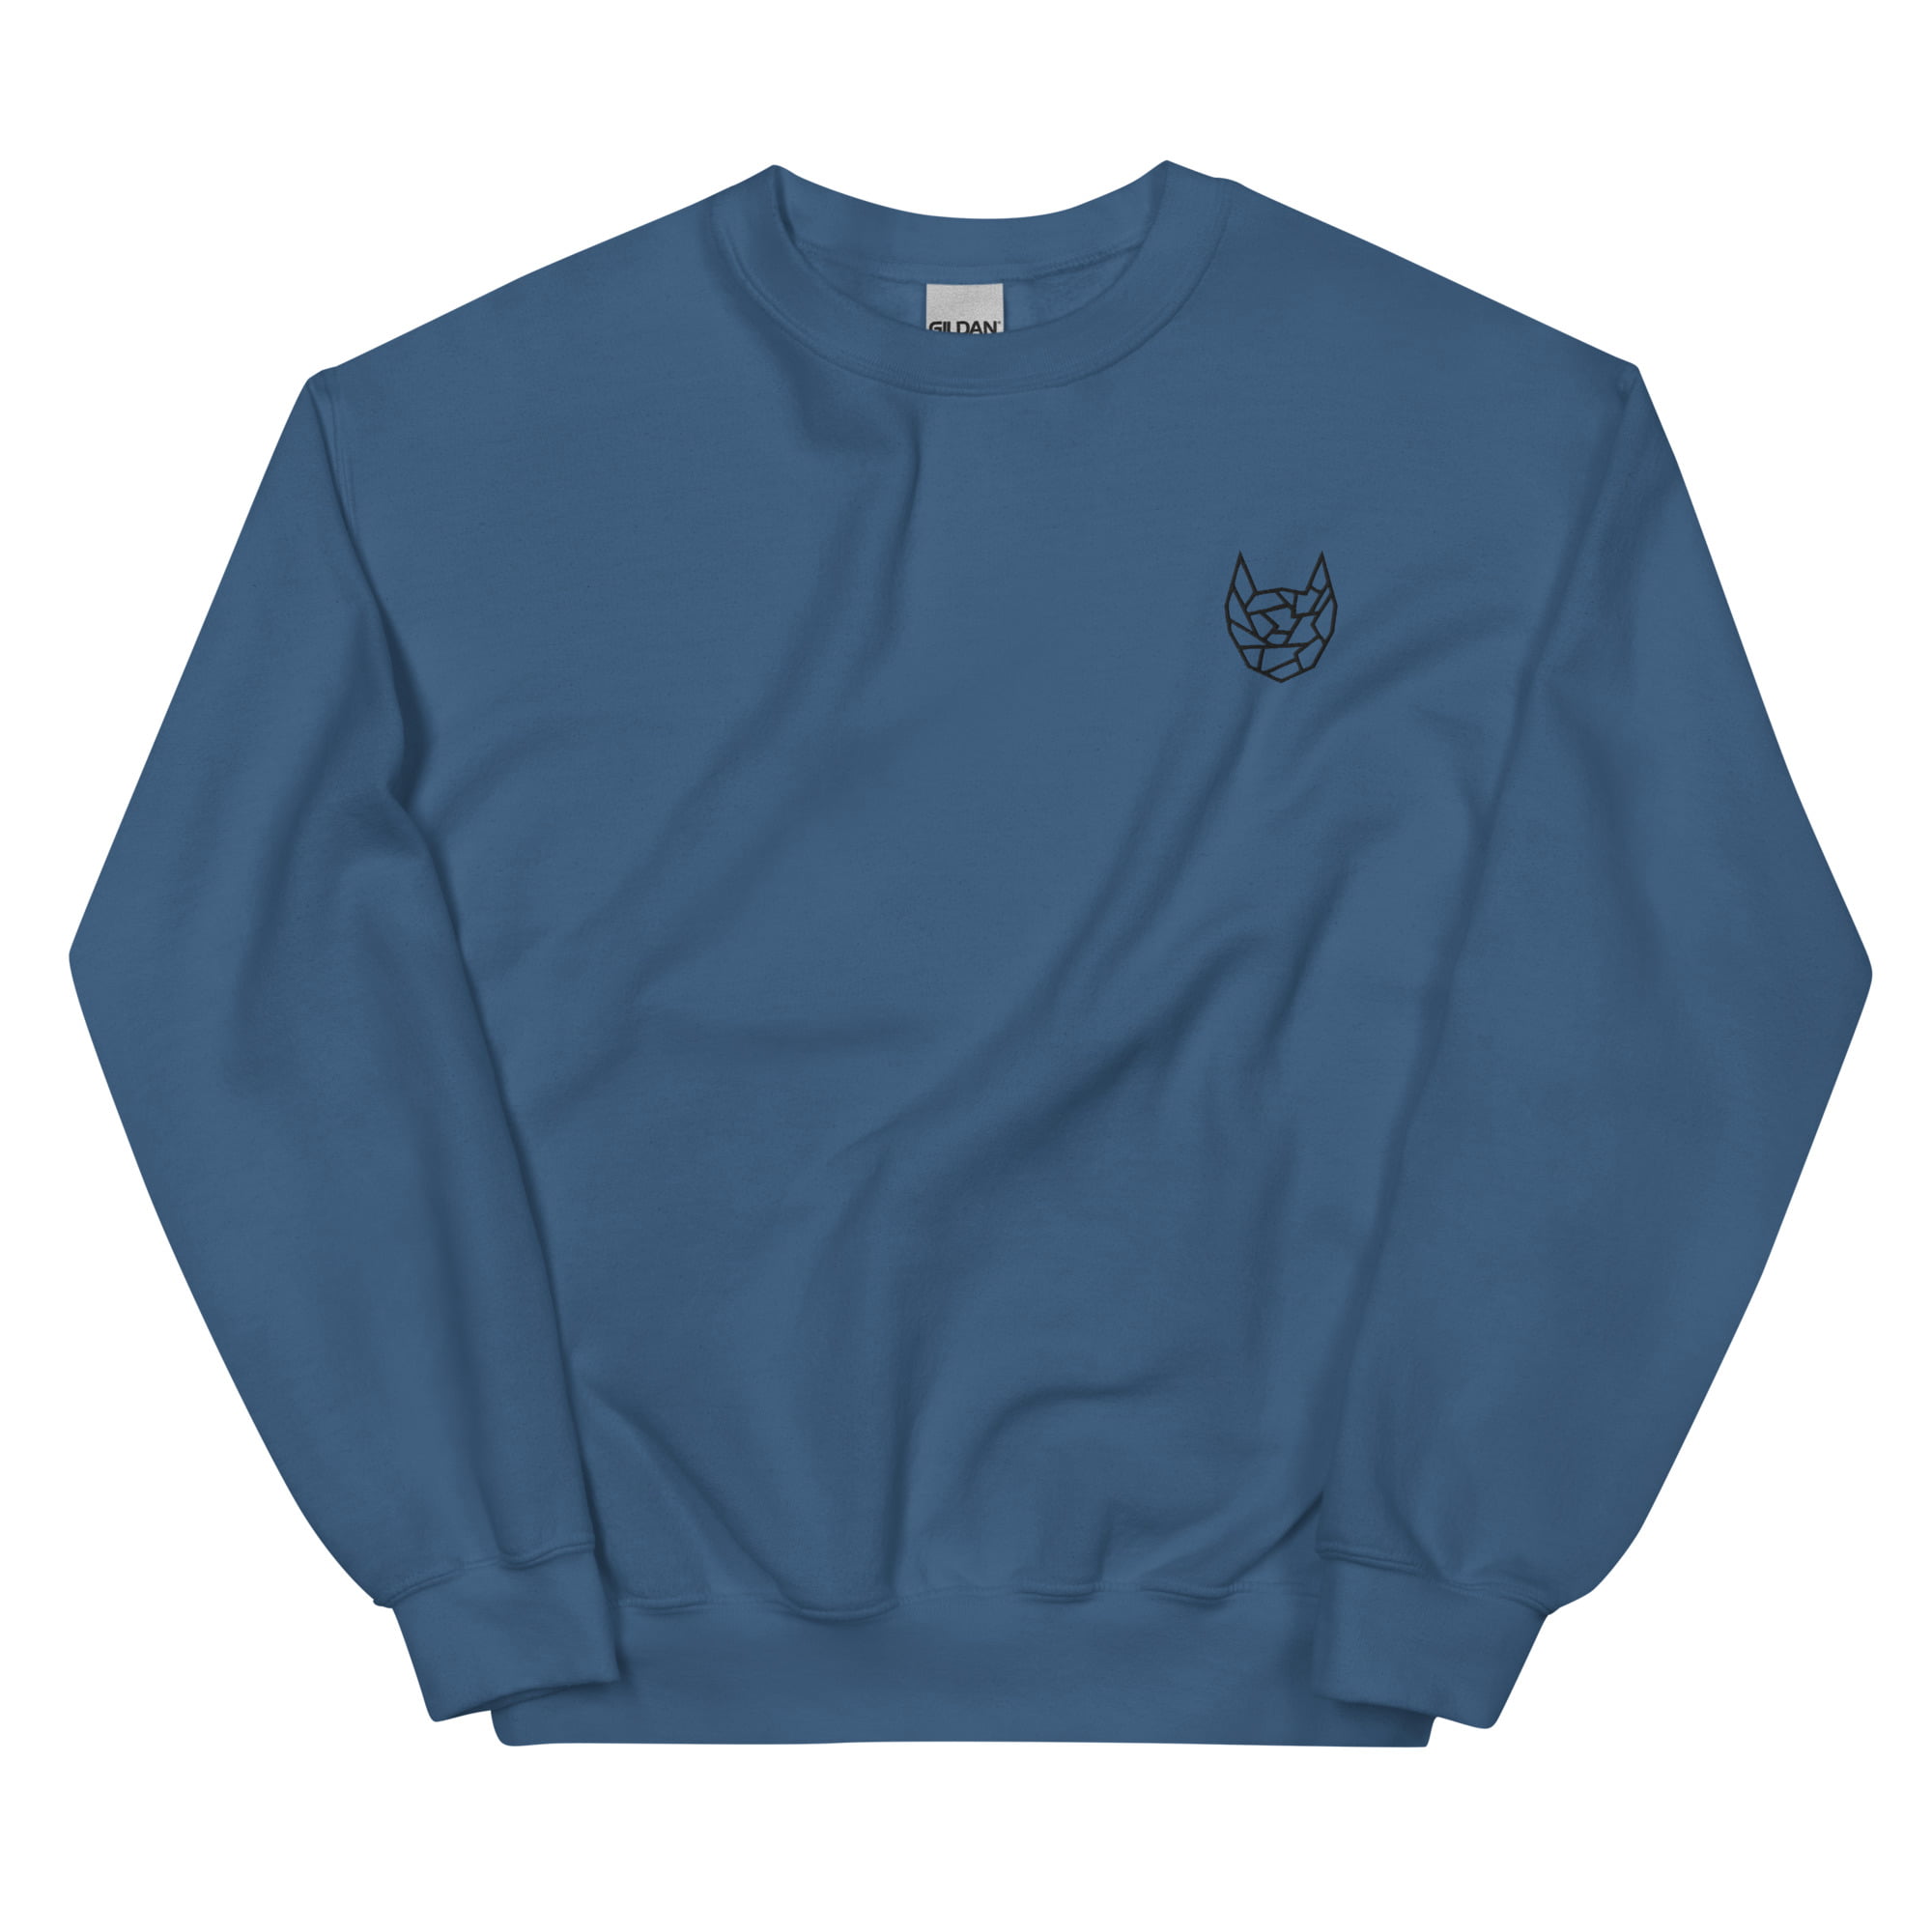 unisex crew neck sweatshirt indigo blue front 6395bc0dac42f